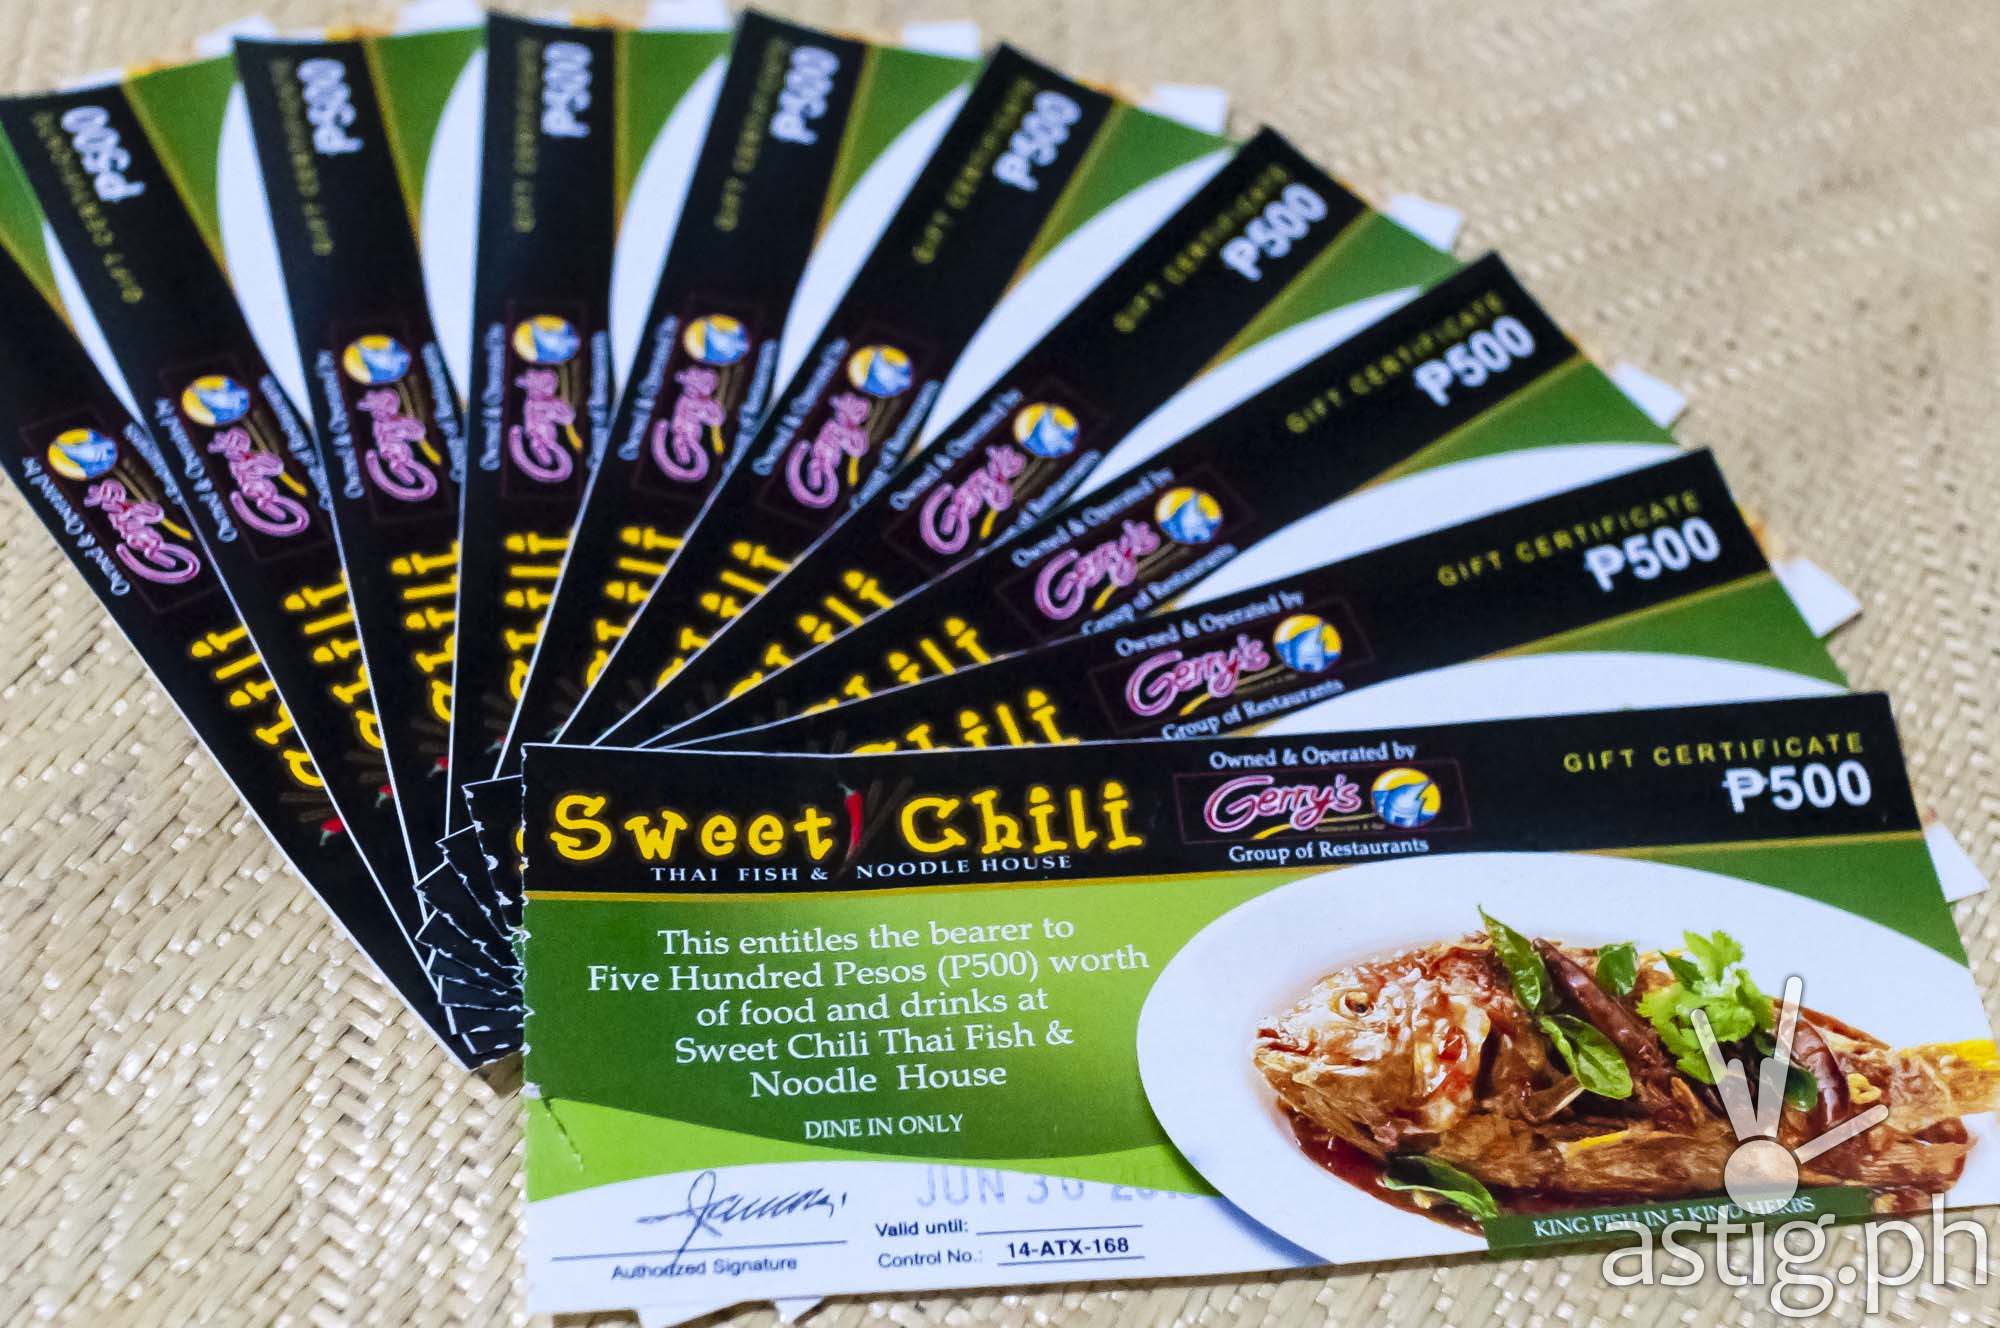 Sweet Chili gift certificates